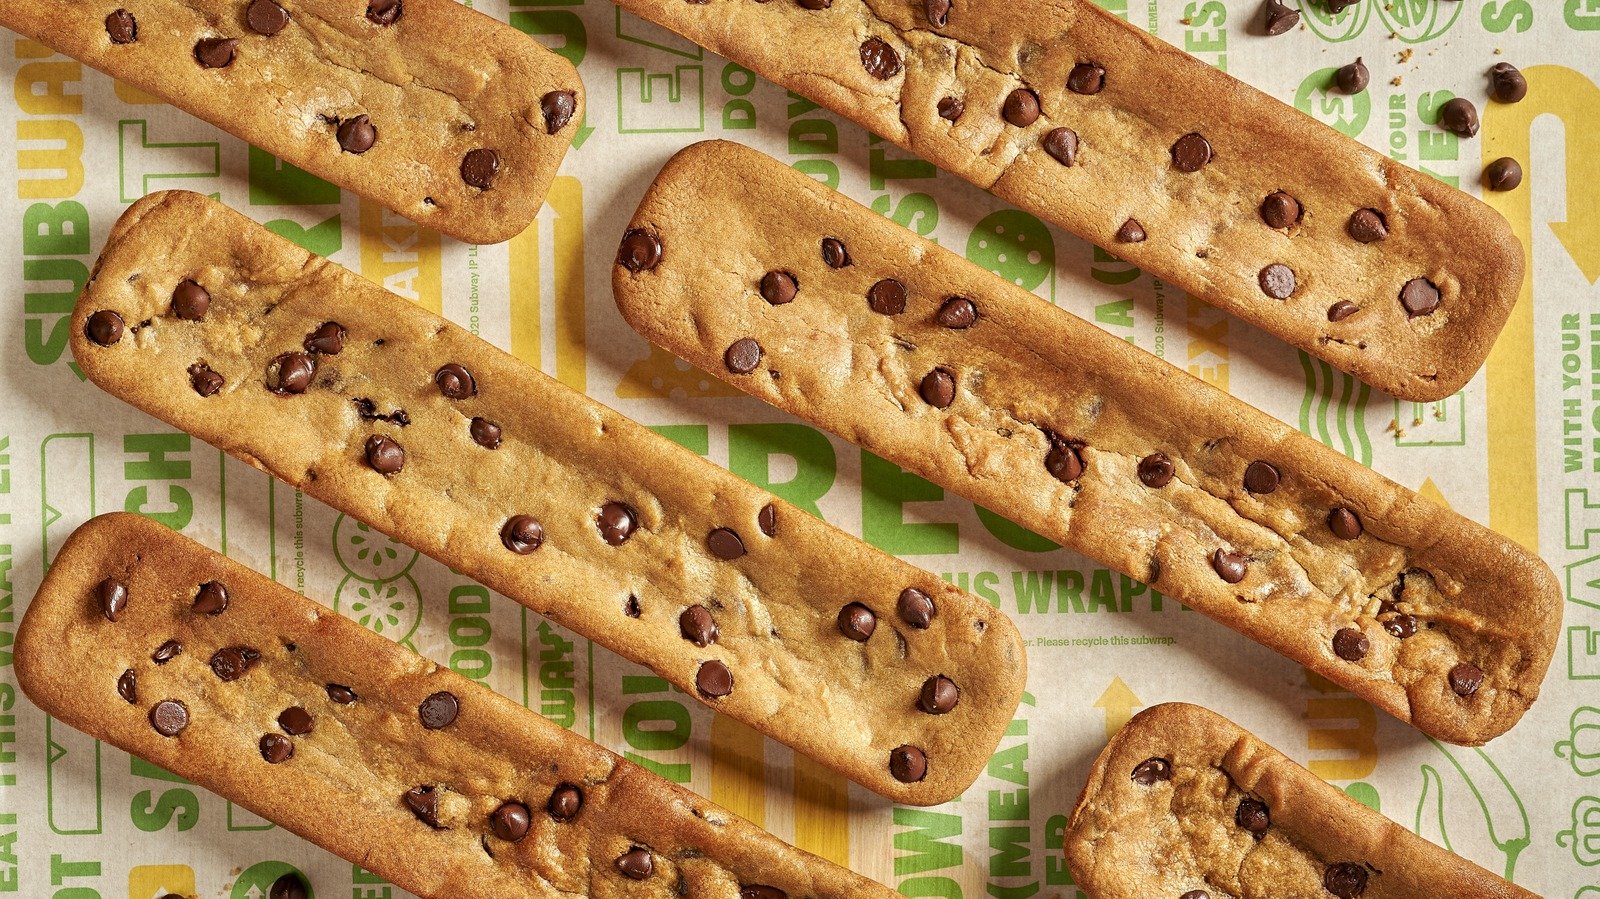 What's Better Than Subway's $5 Footlongs? Free Footlong Cookies